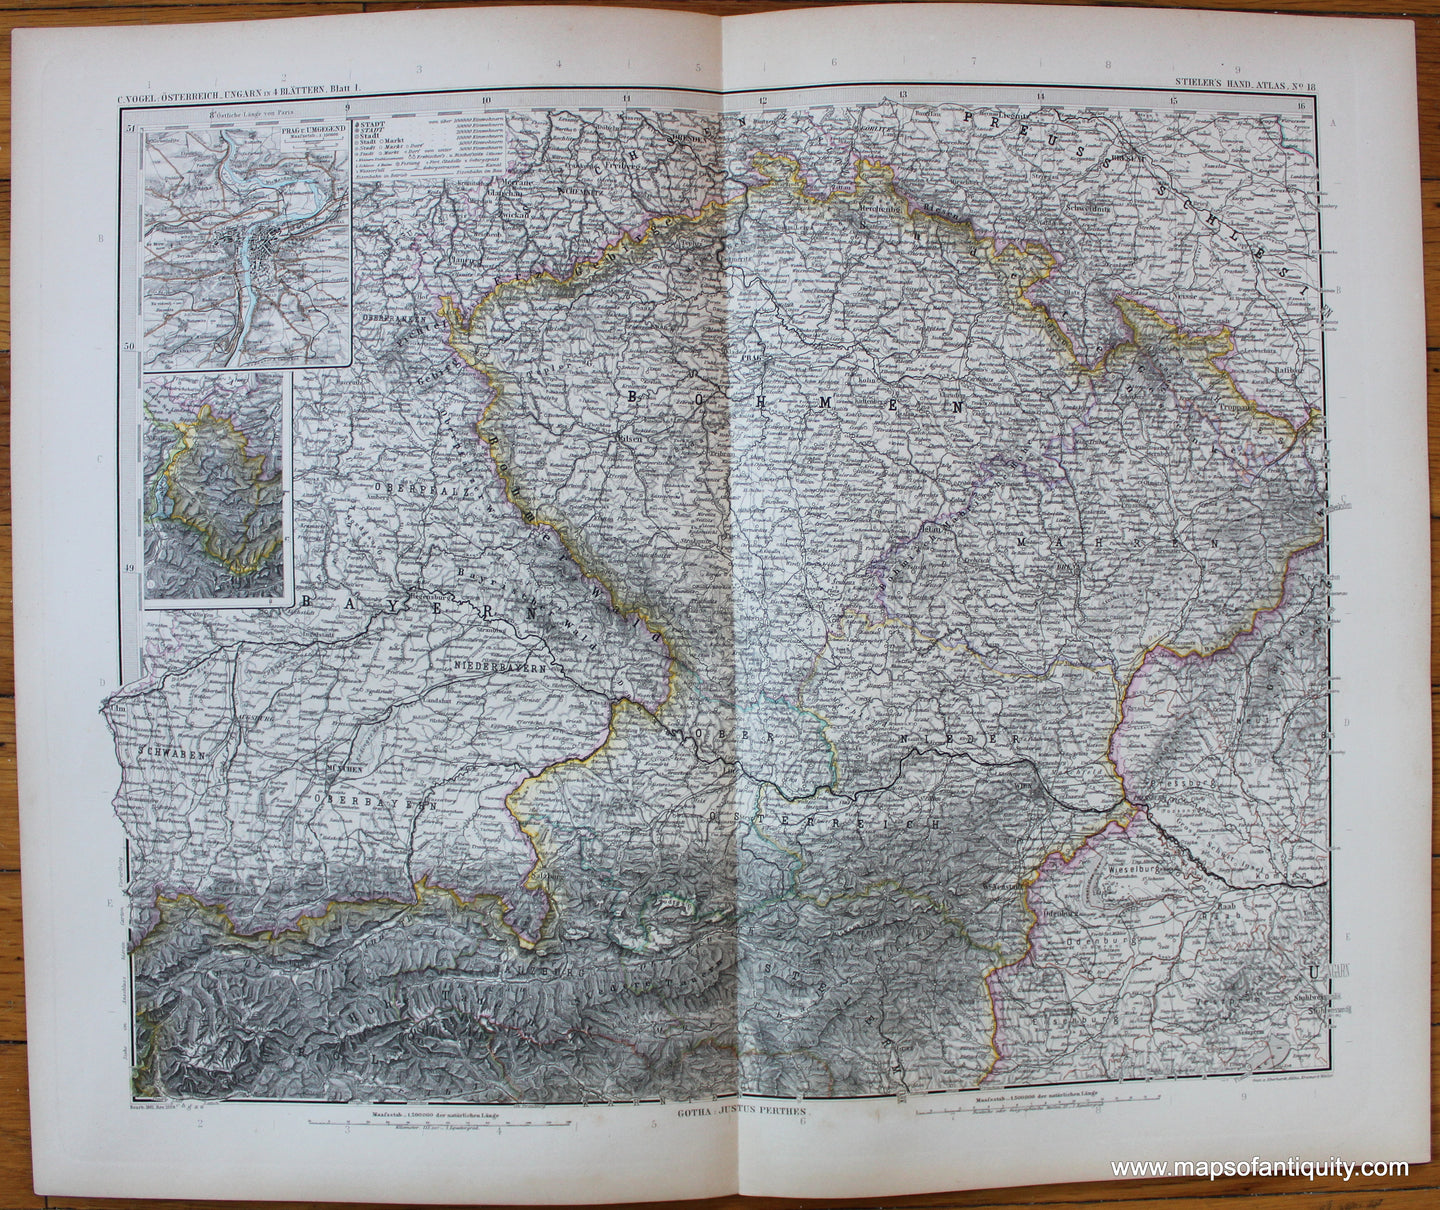 Antique-Printed-Color-Map-Czechia-and-Austria---Osterreich-Ungarn-in-4-Blattern-Blatt-1-Europe-Austria-c.-1889-Stieler-Maps-Of-Antiquity-1800s-19th-century